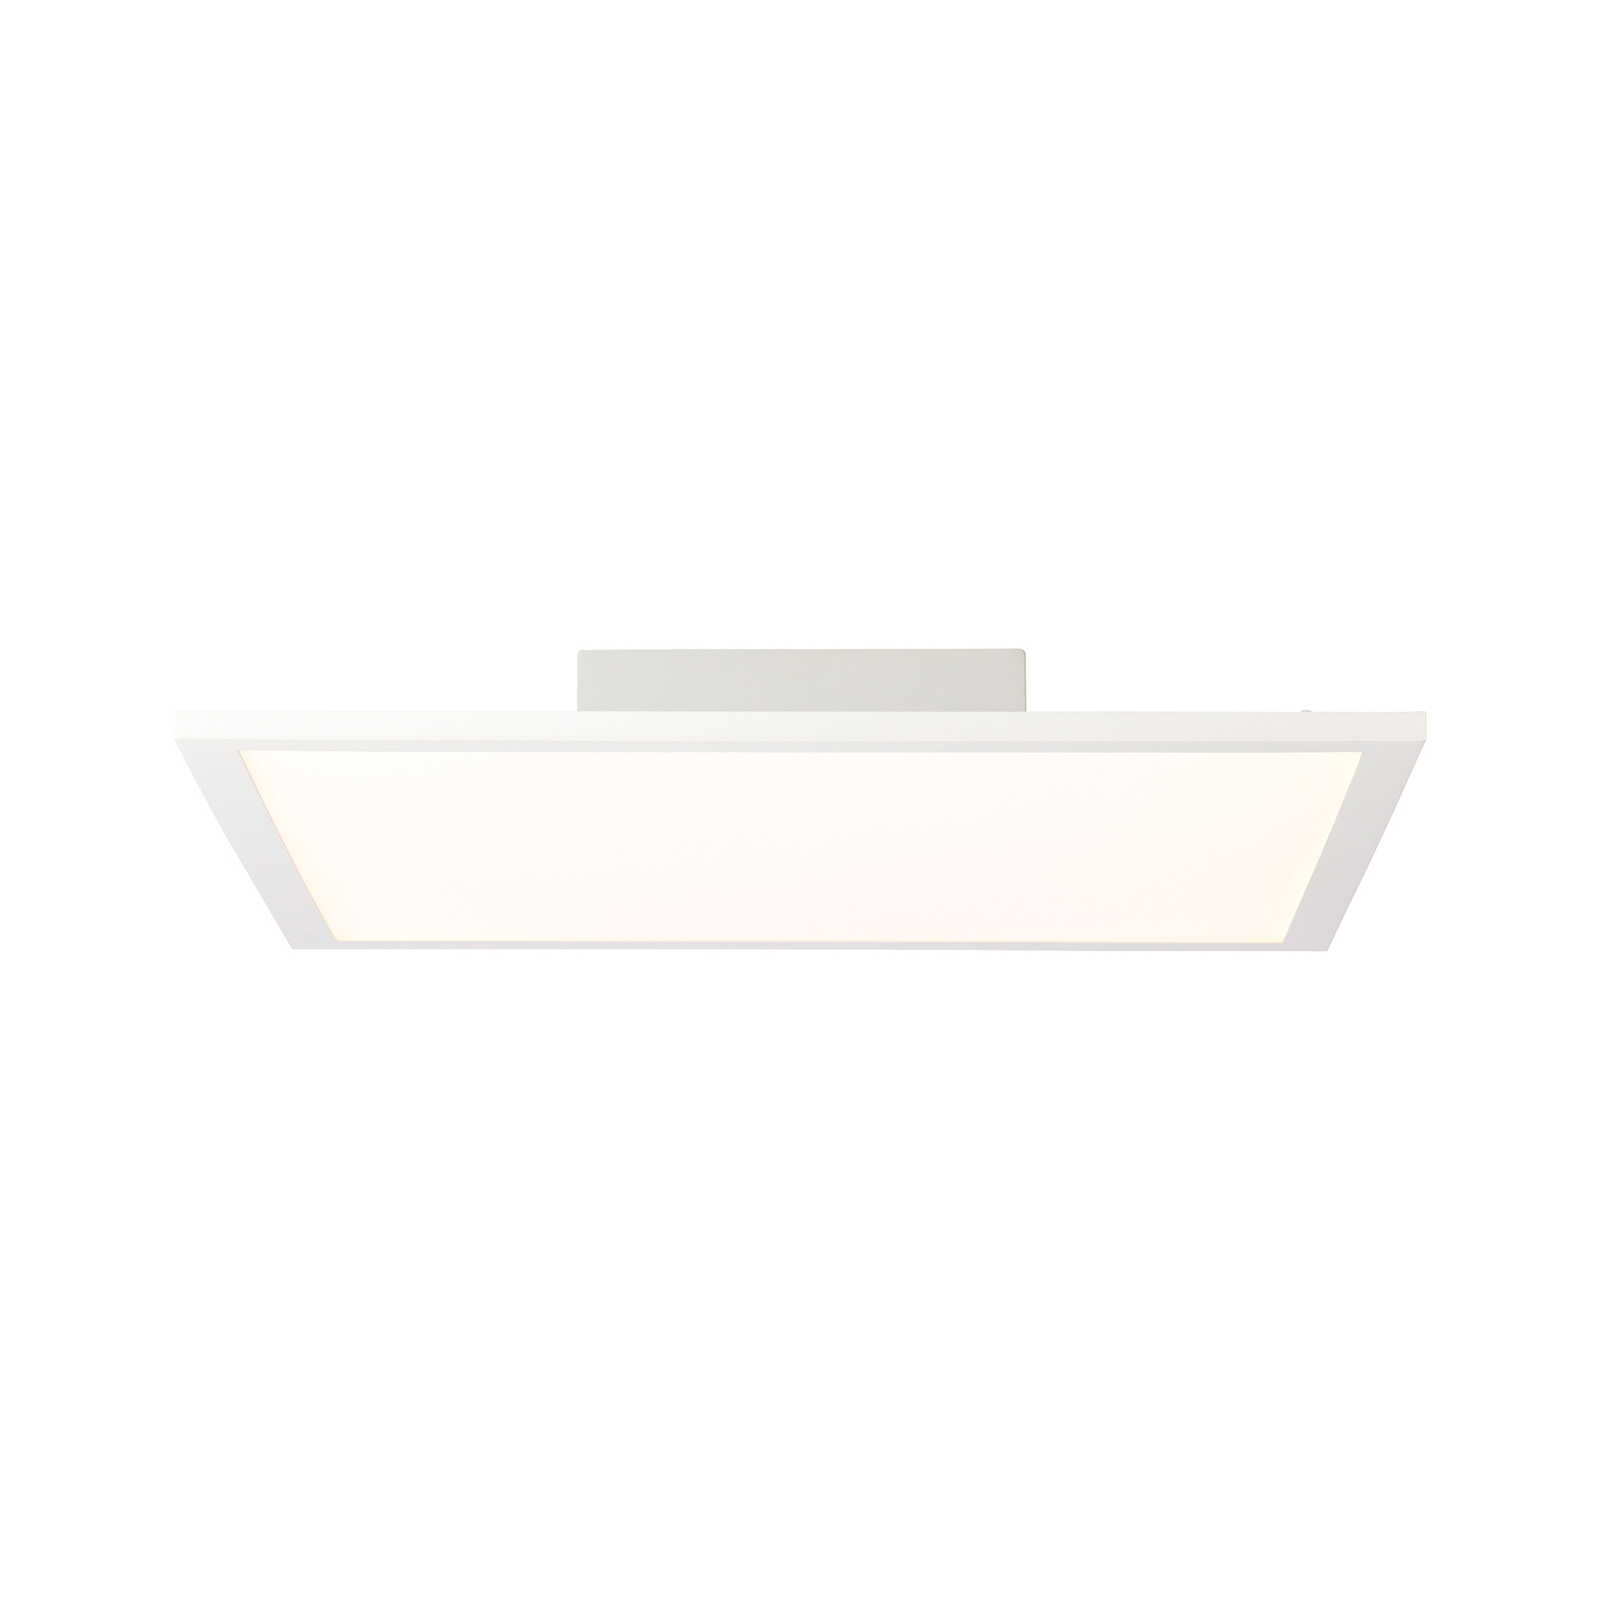 Plastic ceiling light - Constantin 3 - White
